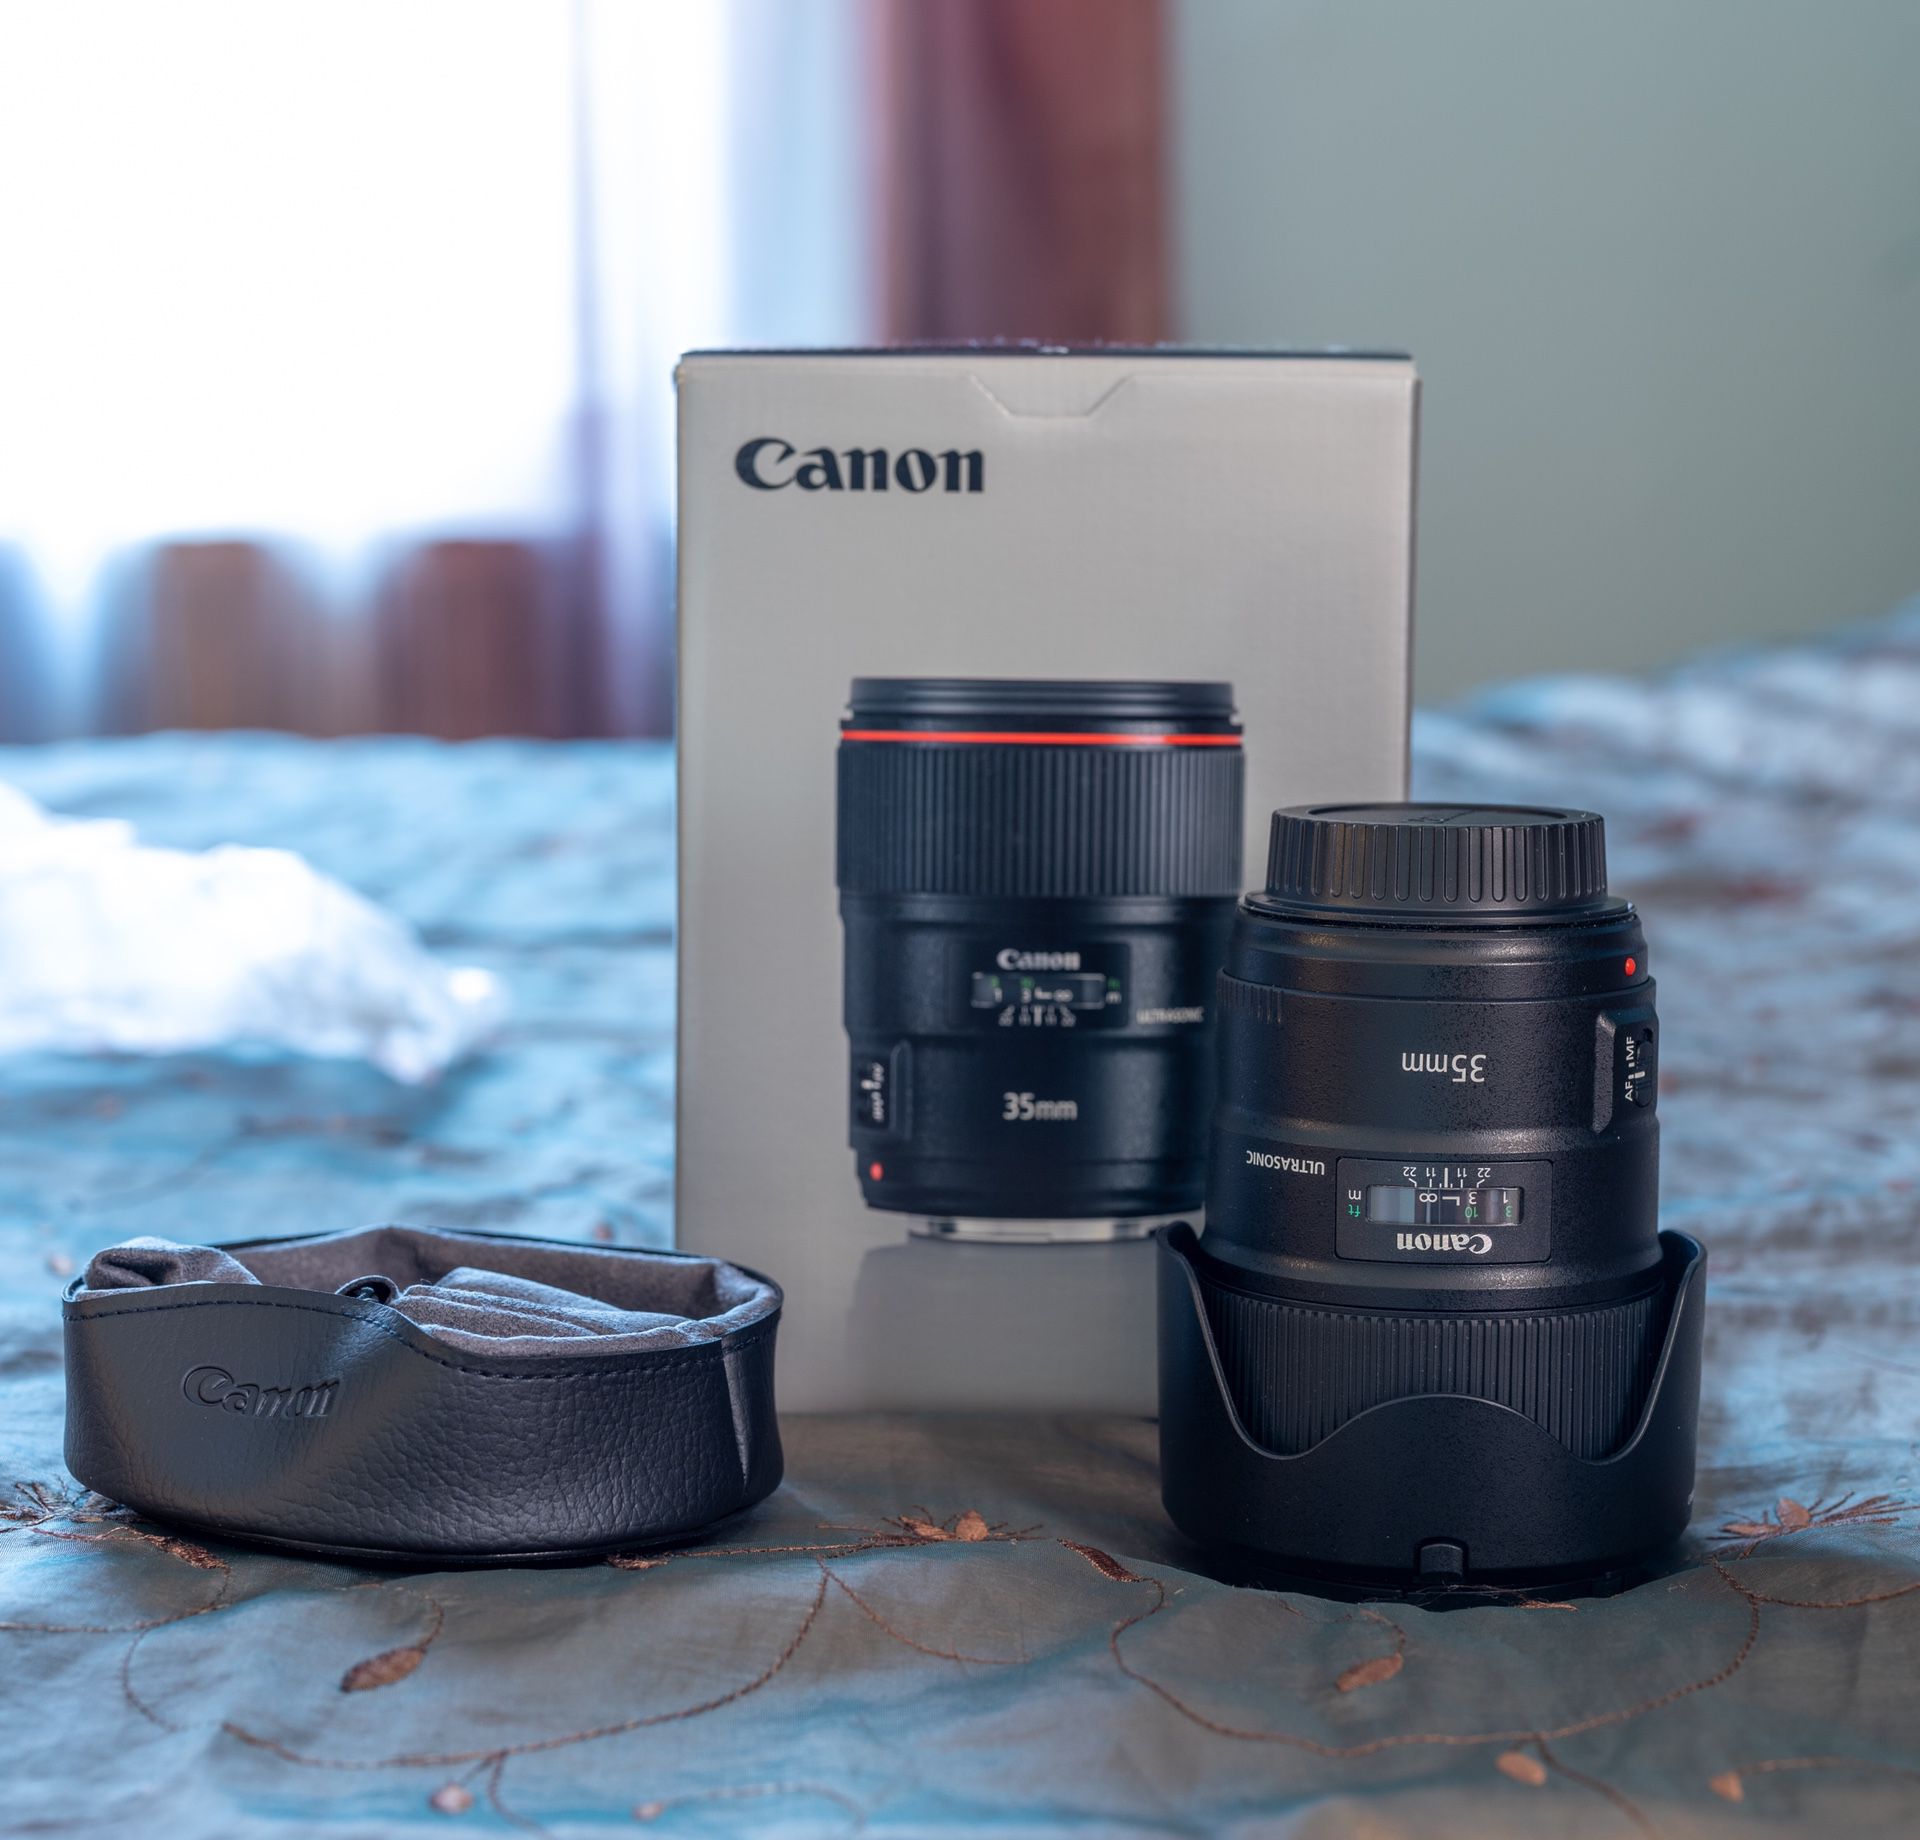 Canon EF 35mm f/1.4L II USM Lens